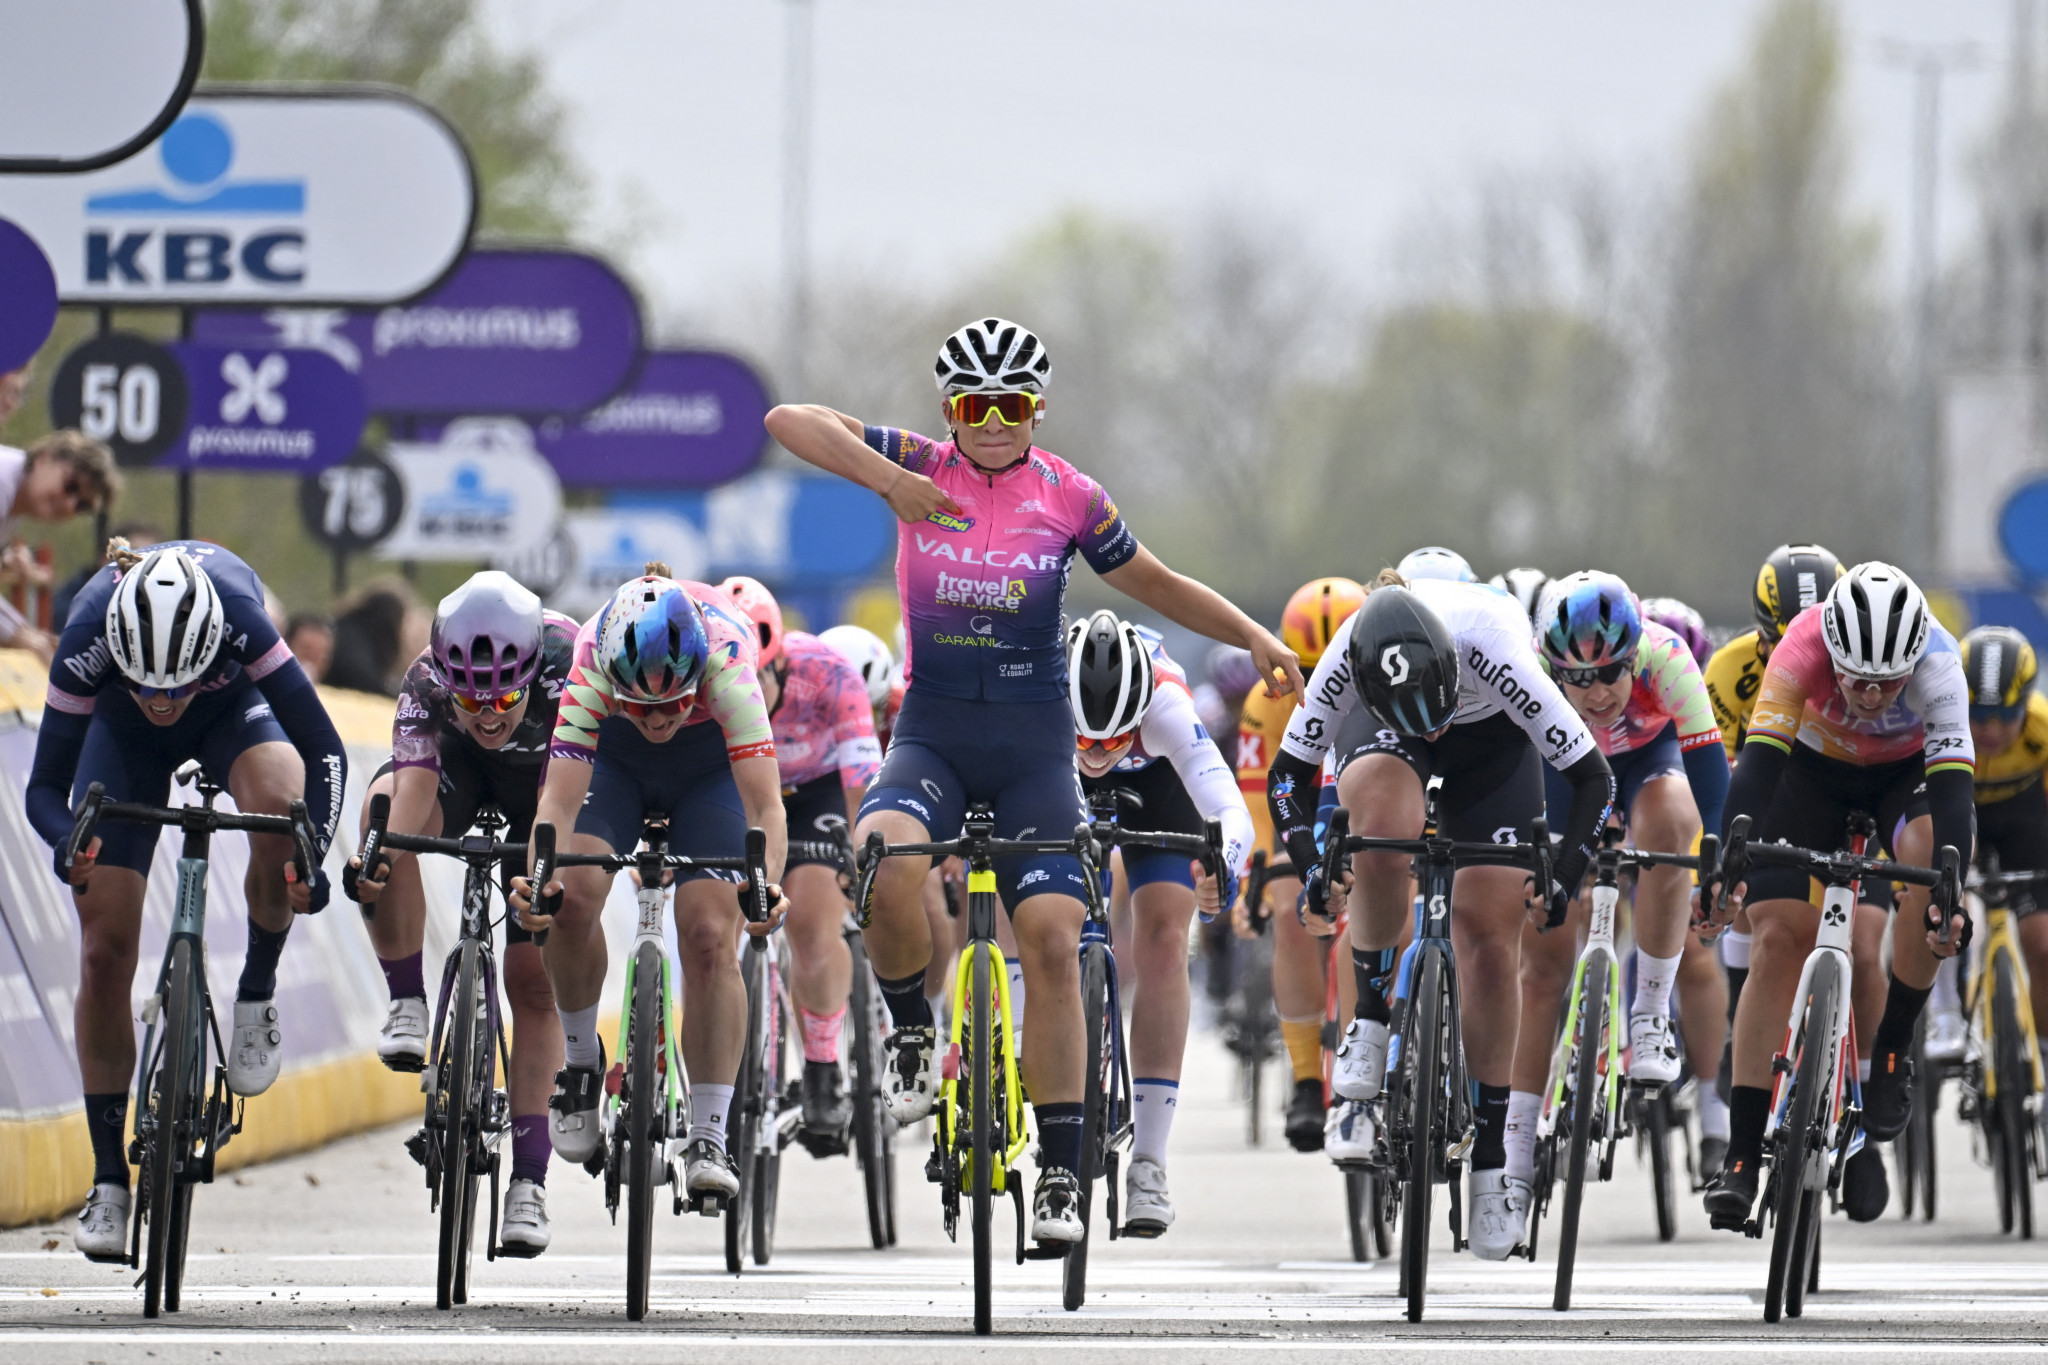 Chiara Consonni sprinted to victory in the women's Dwars door Vlaanderen race ©Getty Images